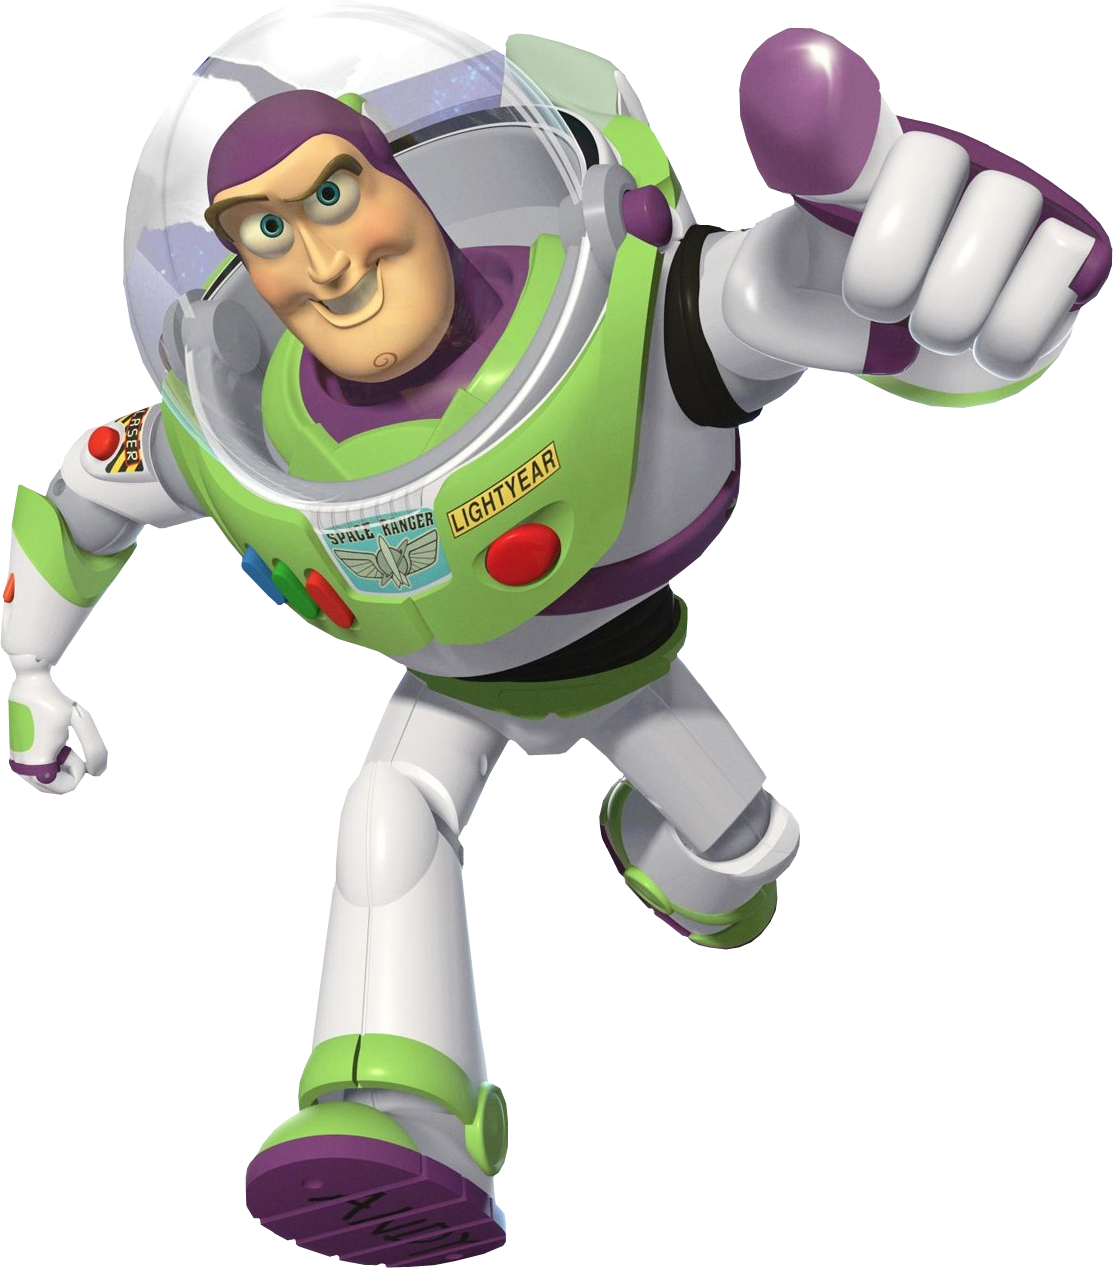 Buzz Lightyear Image Download - Tovirage